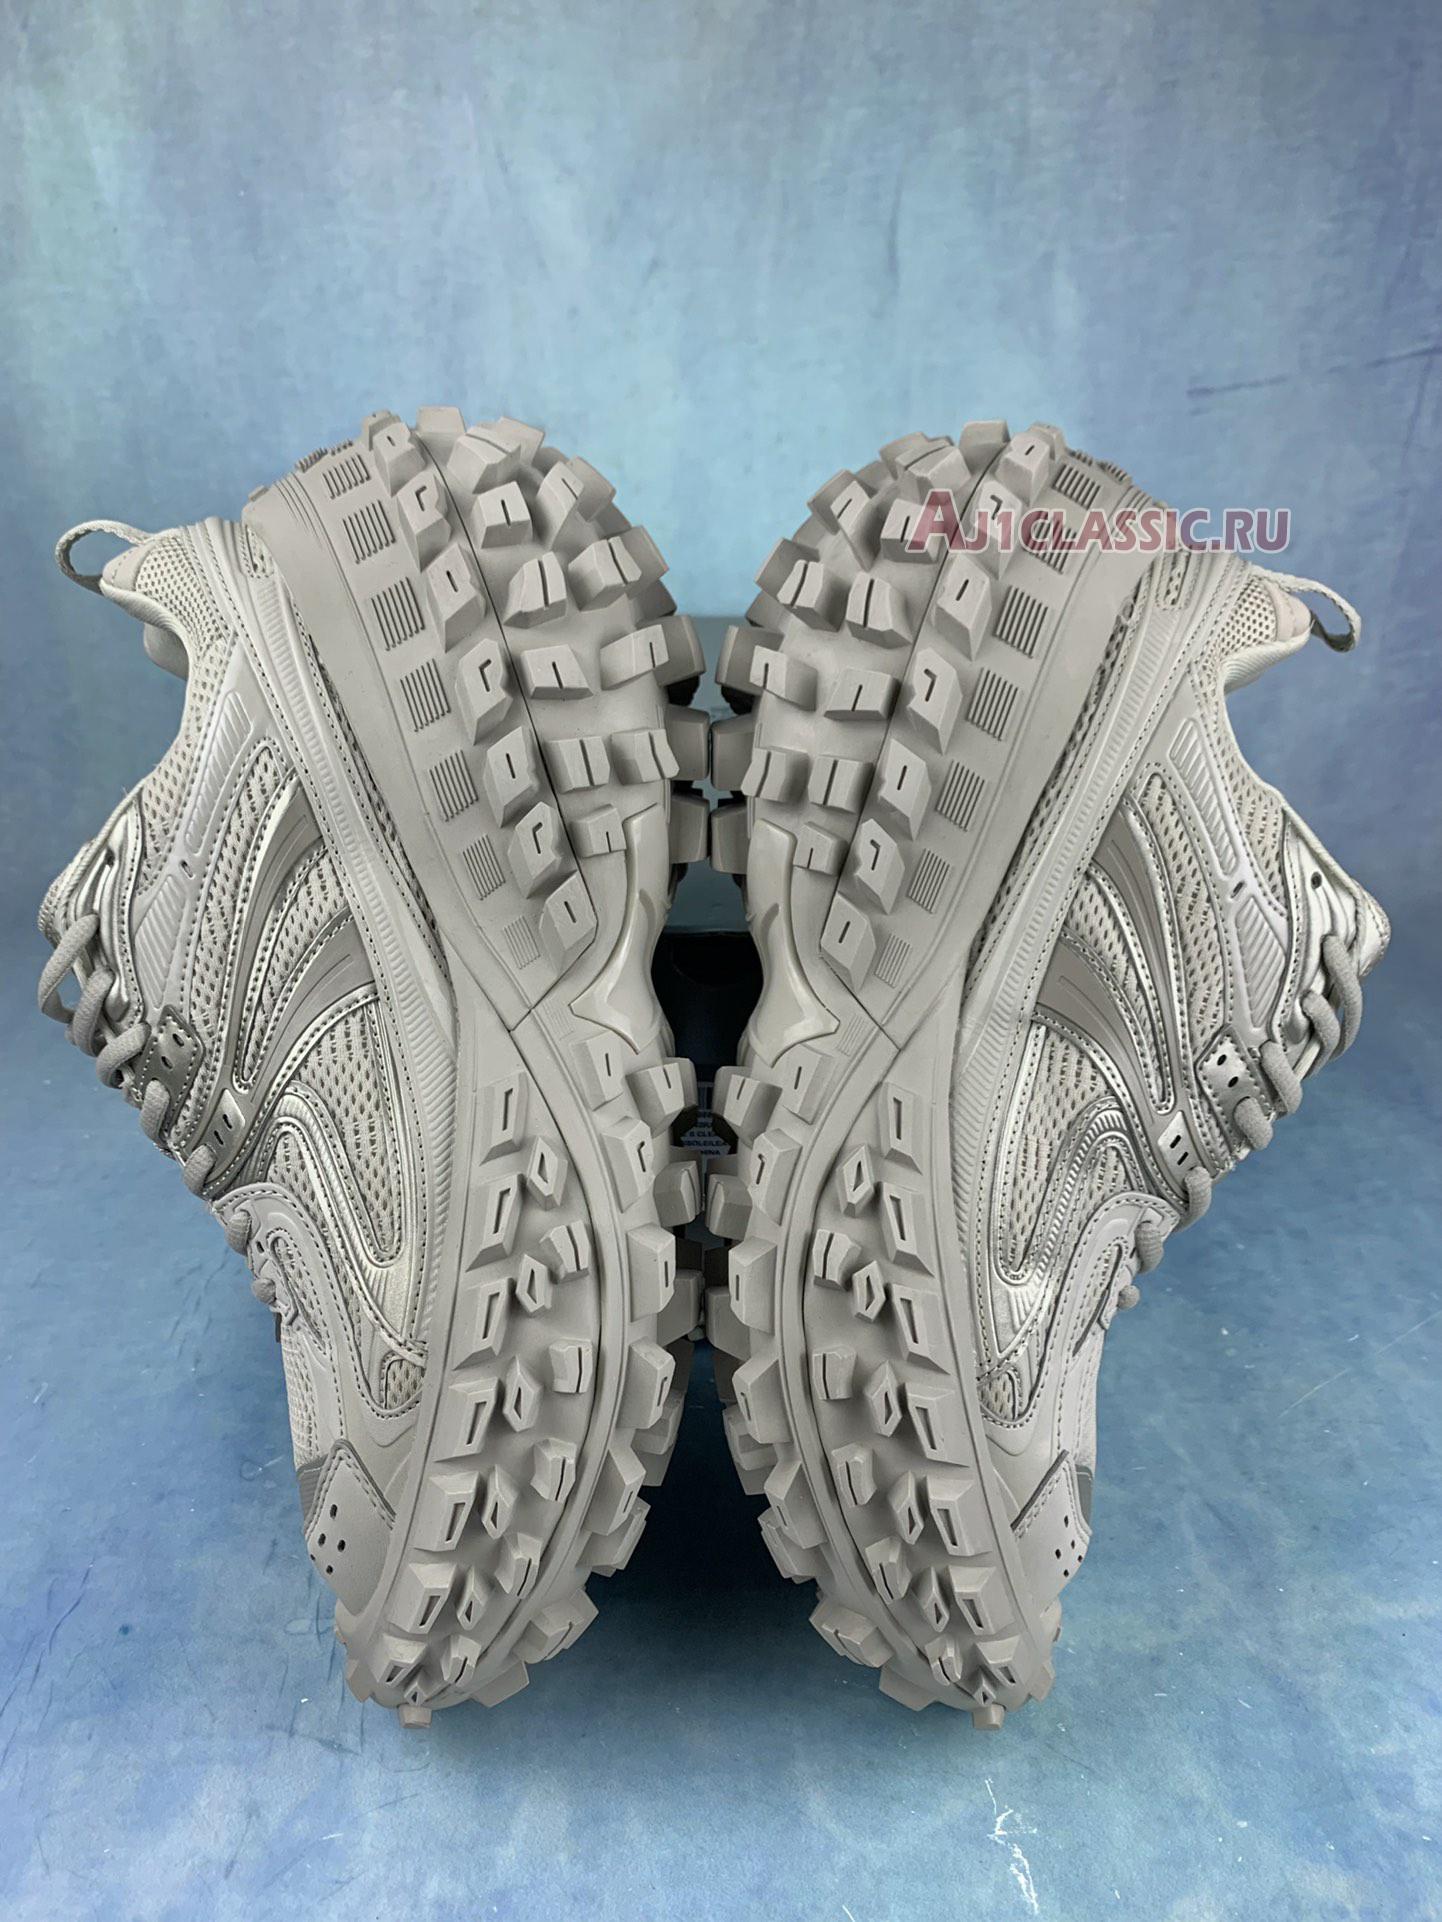 Balenciaga Defender Sneaker "Beige" 685613 W2RA6 9700